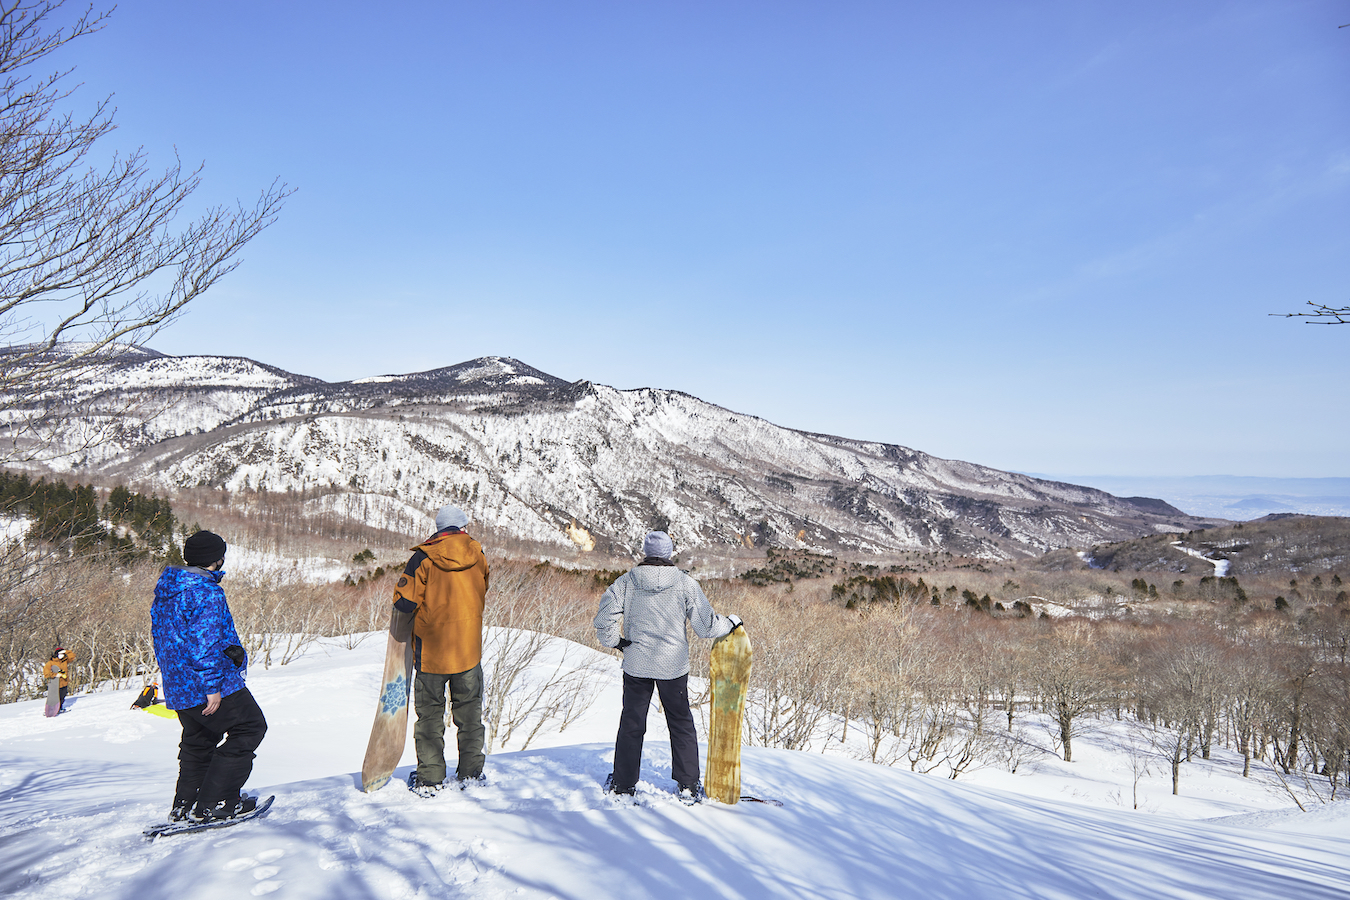 Three Days of Winter Adventure on Tohoku’s Azuma Mountain Range